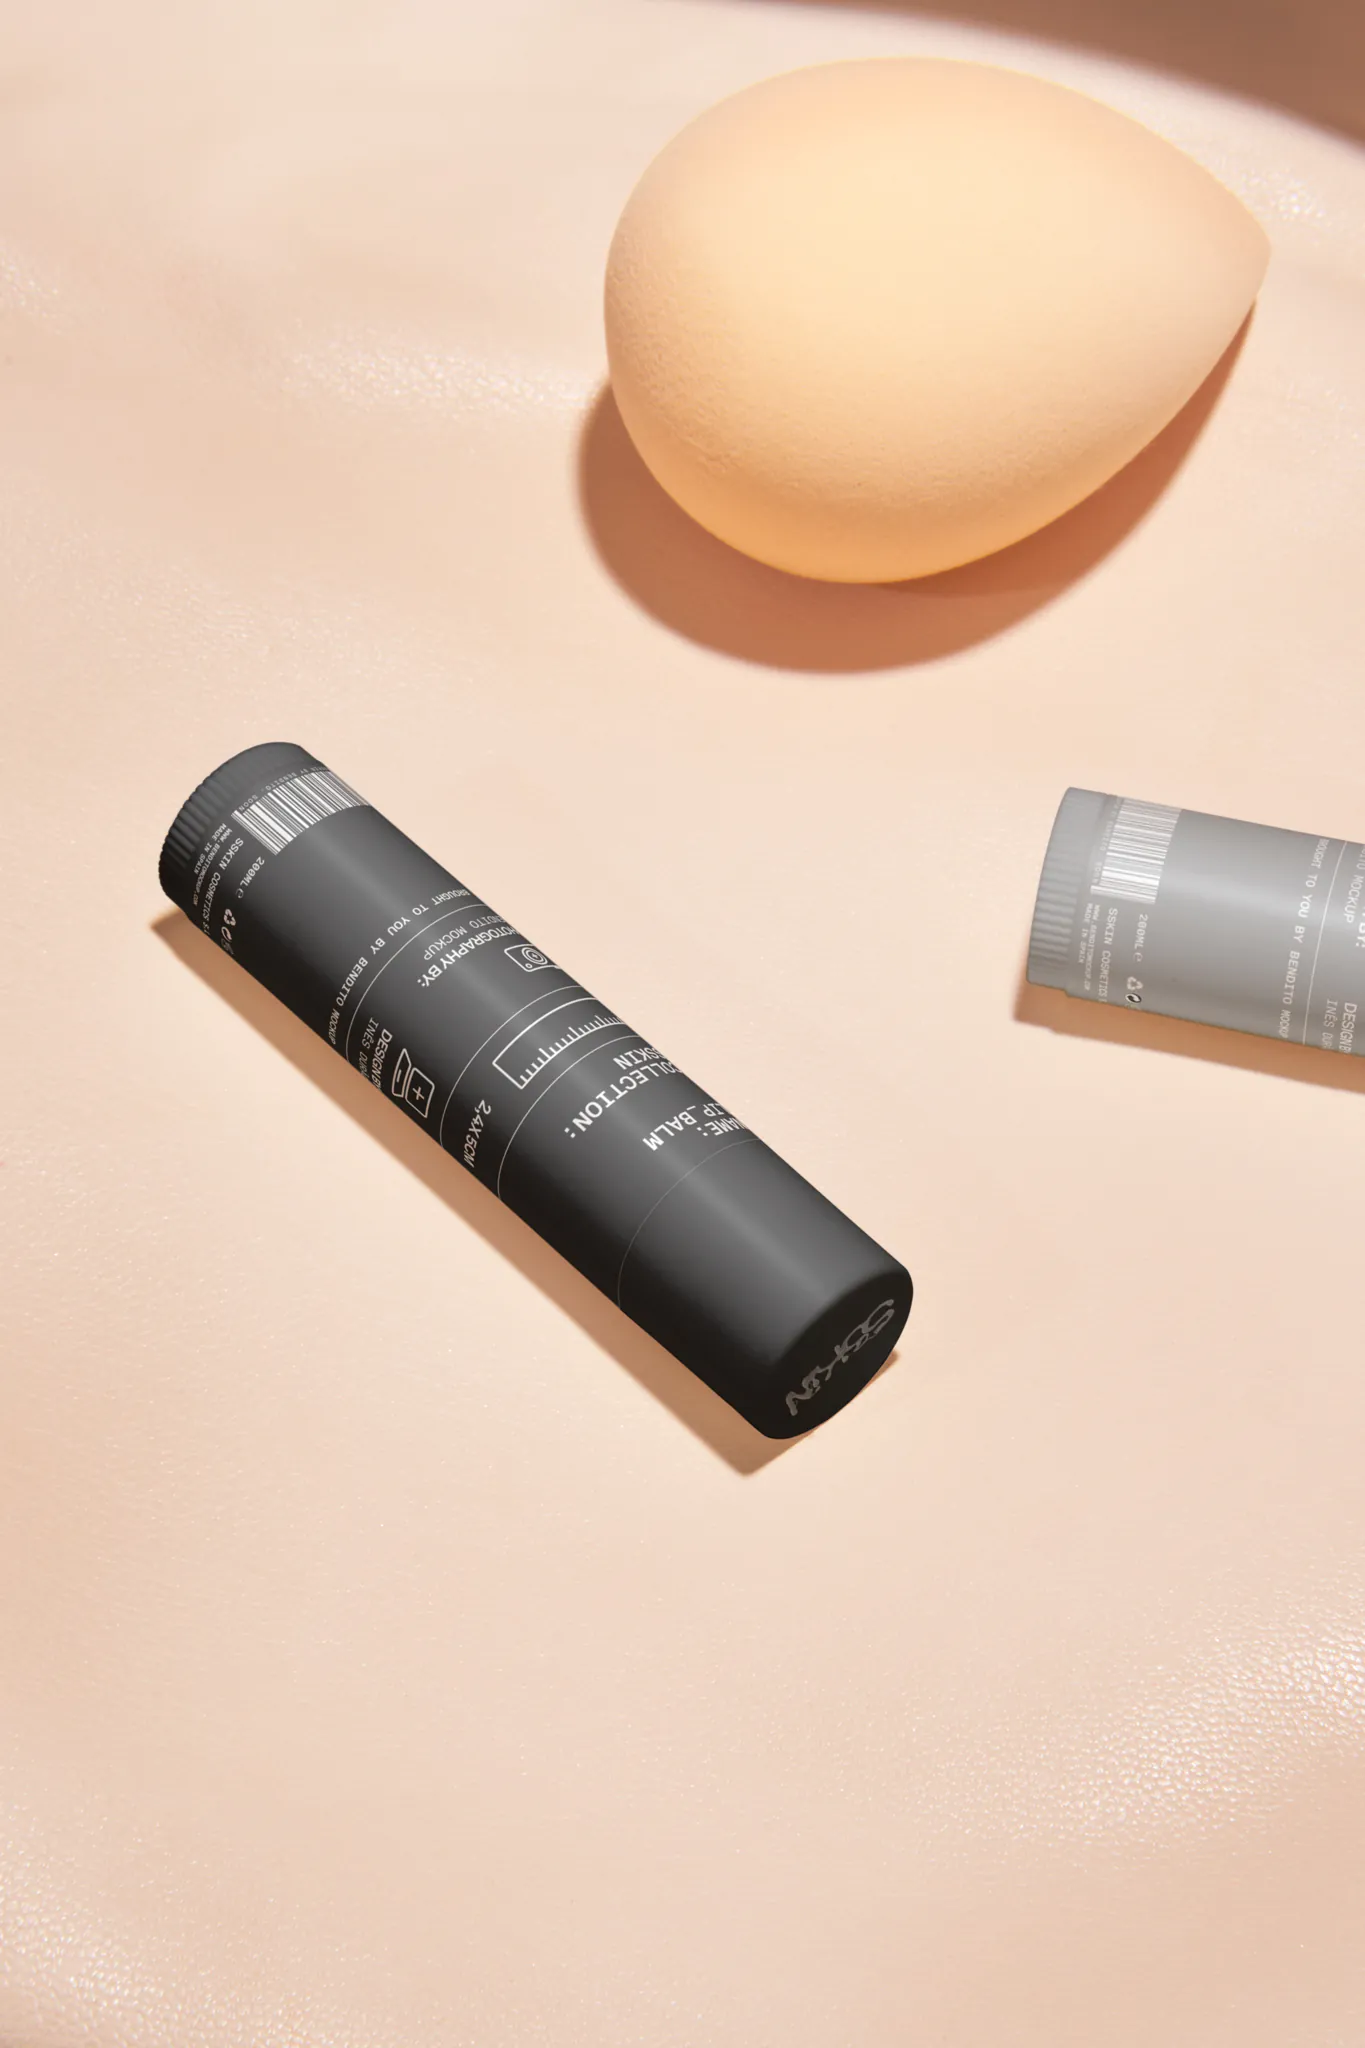 2 Lip balms mockup over a leather surface. Lip balm mockup. Packaging mockup. Premium quality skin care mockup.